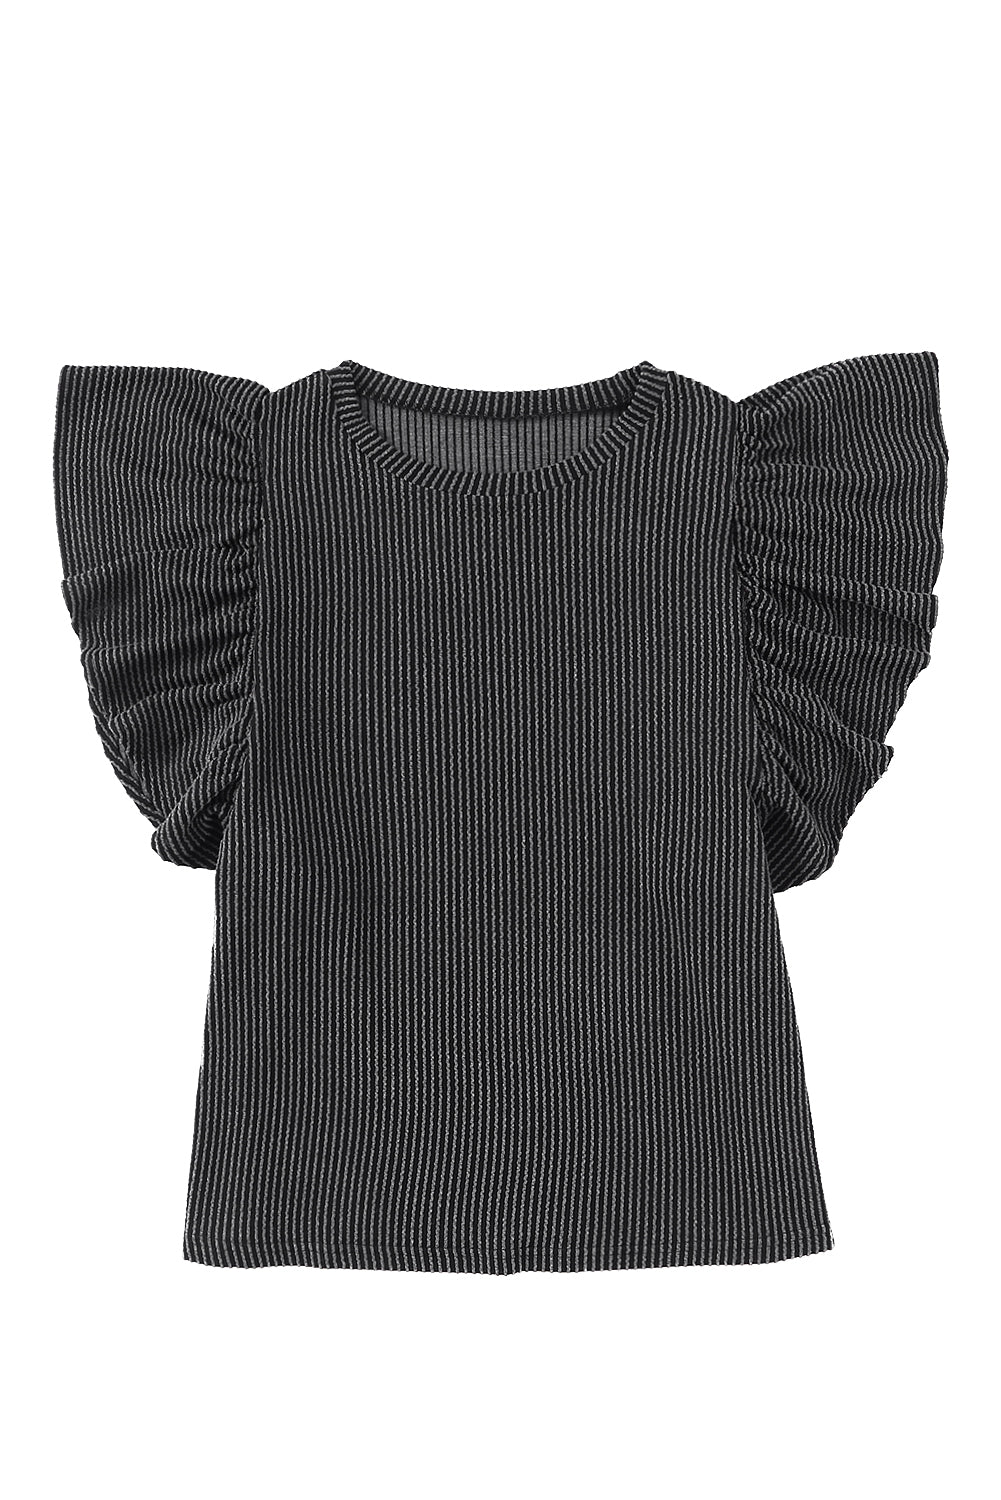 Black Ribbed Knit Ruffled Short Sleeve T Shirt